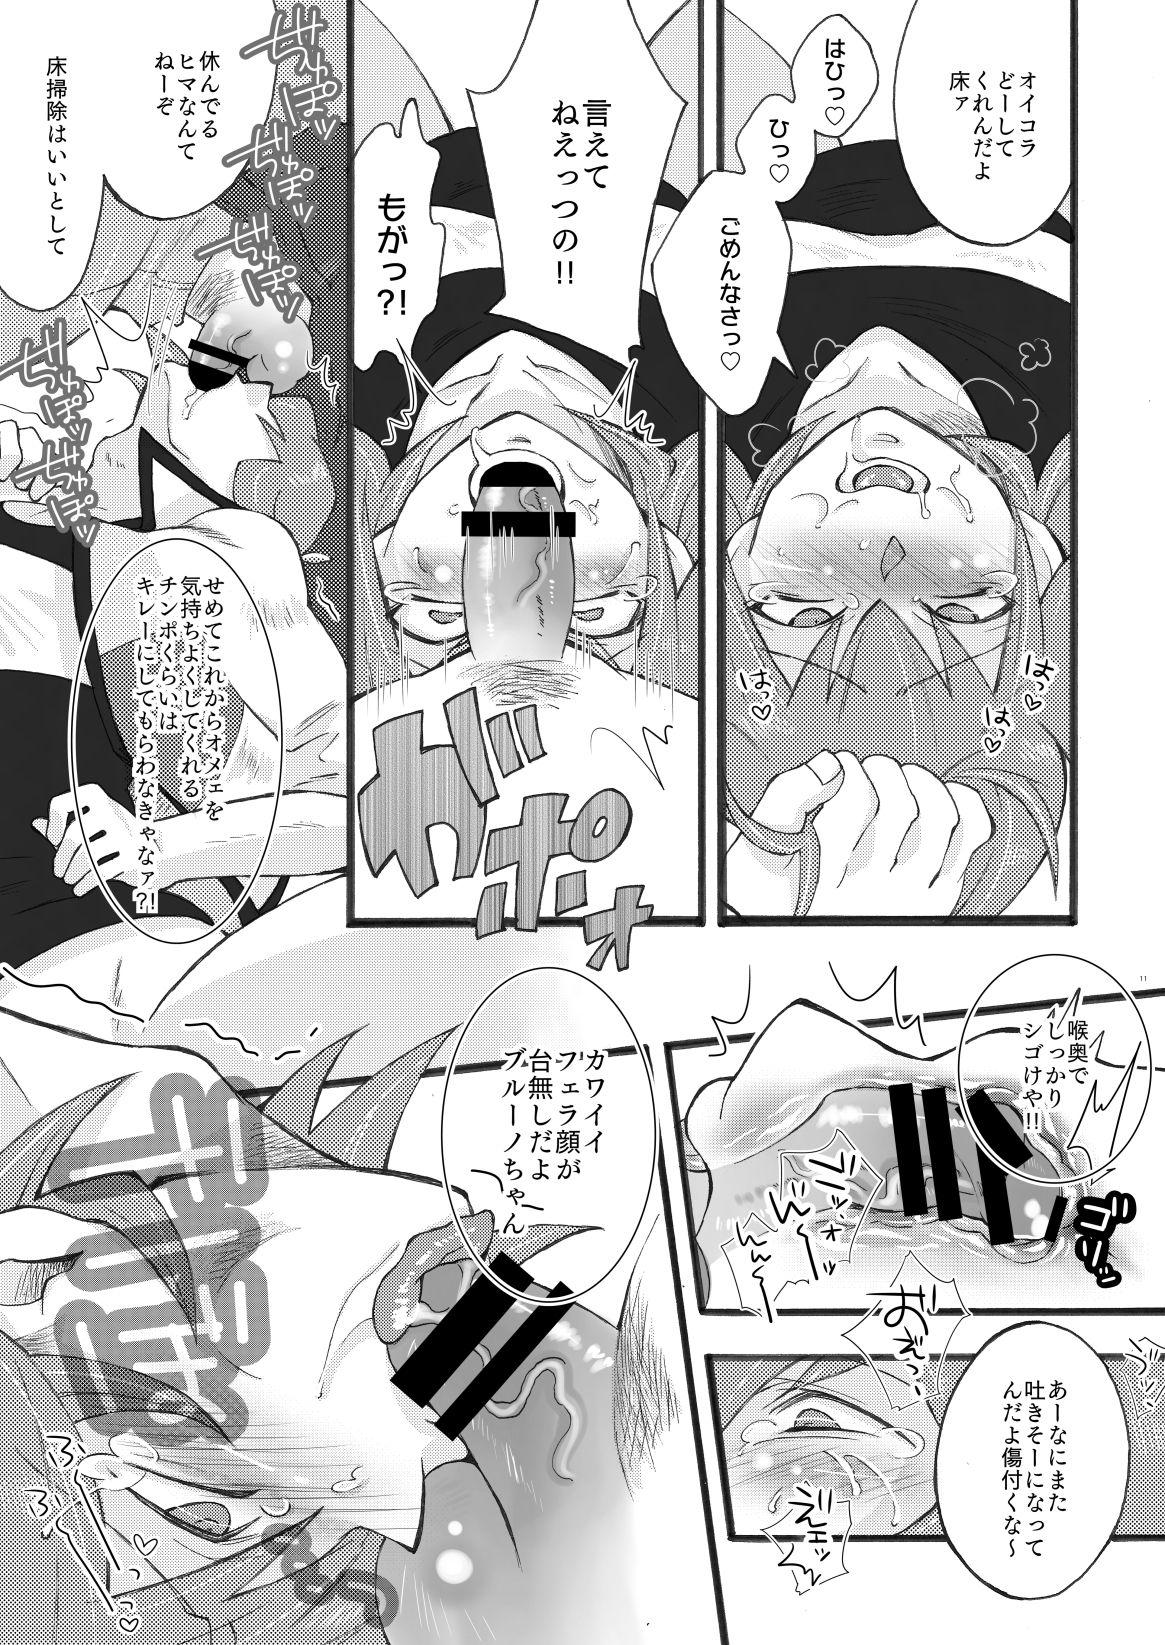 Weird Dosukebe Burūno-chan no D - Yu gi oh 5ds Breasts - Page 10